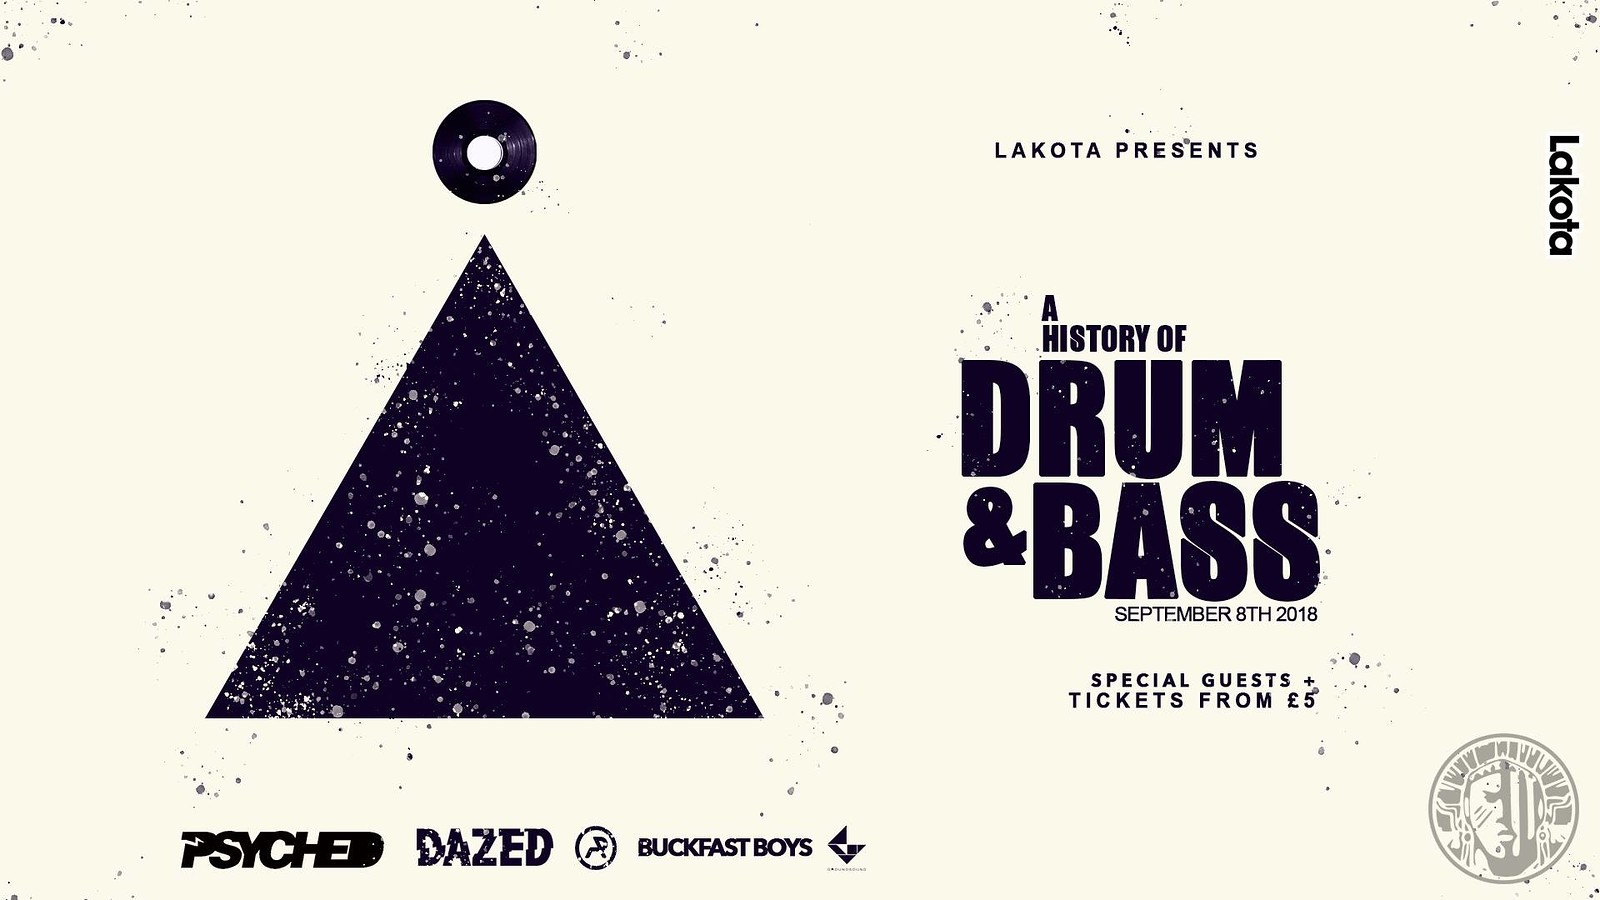 Lakota presents: A History of Drum & Bass at Lakota